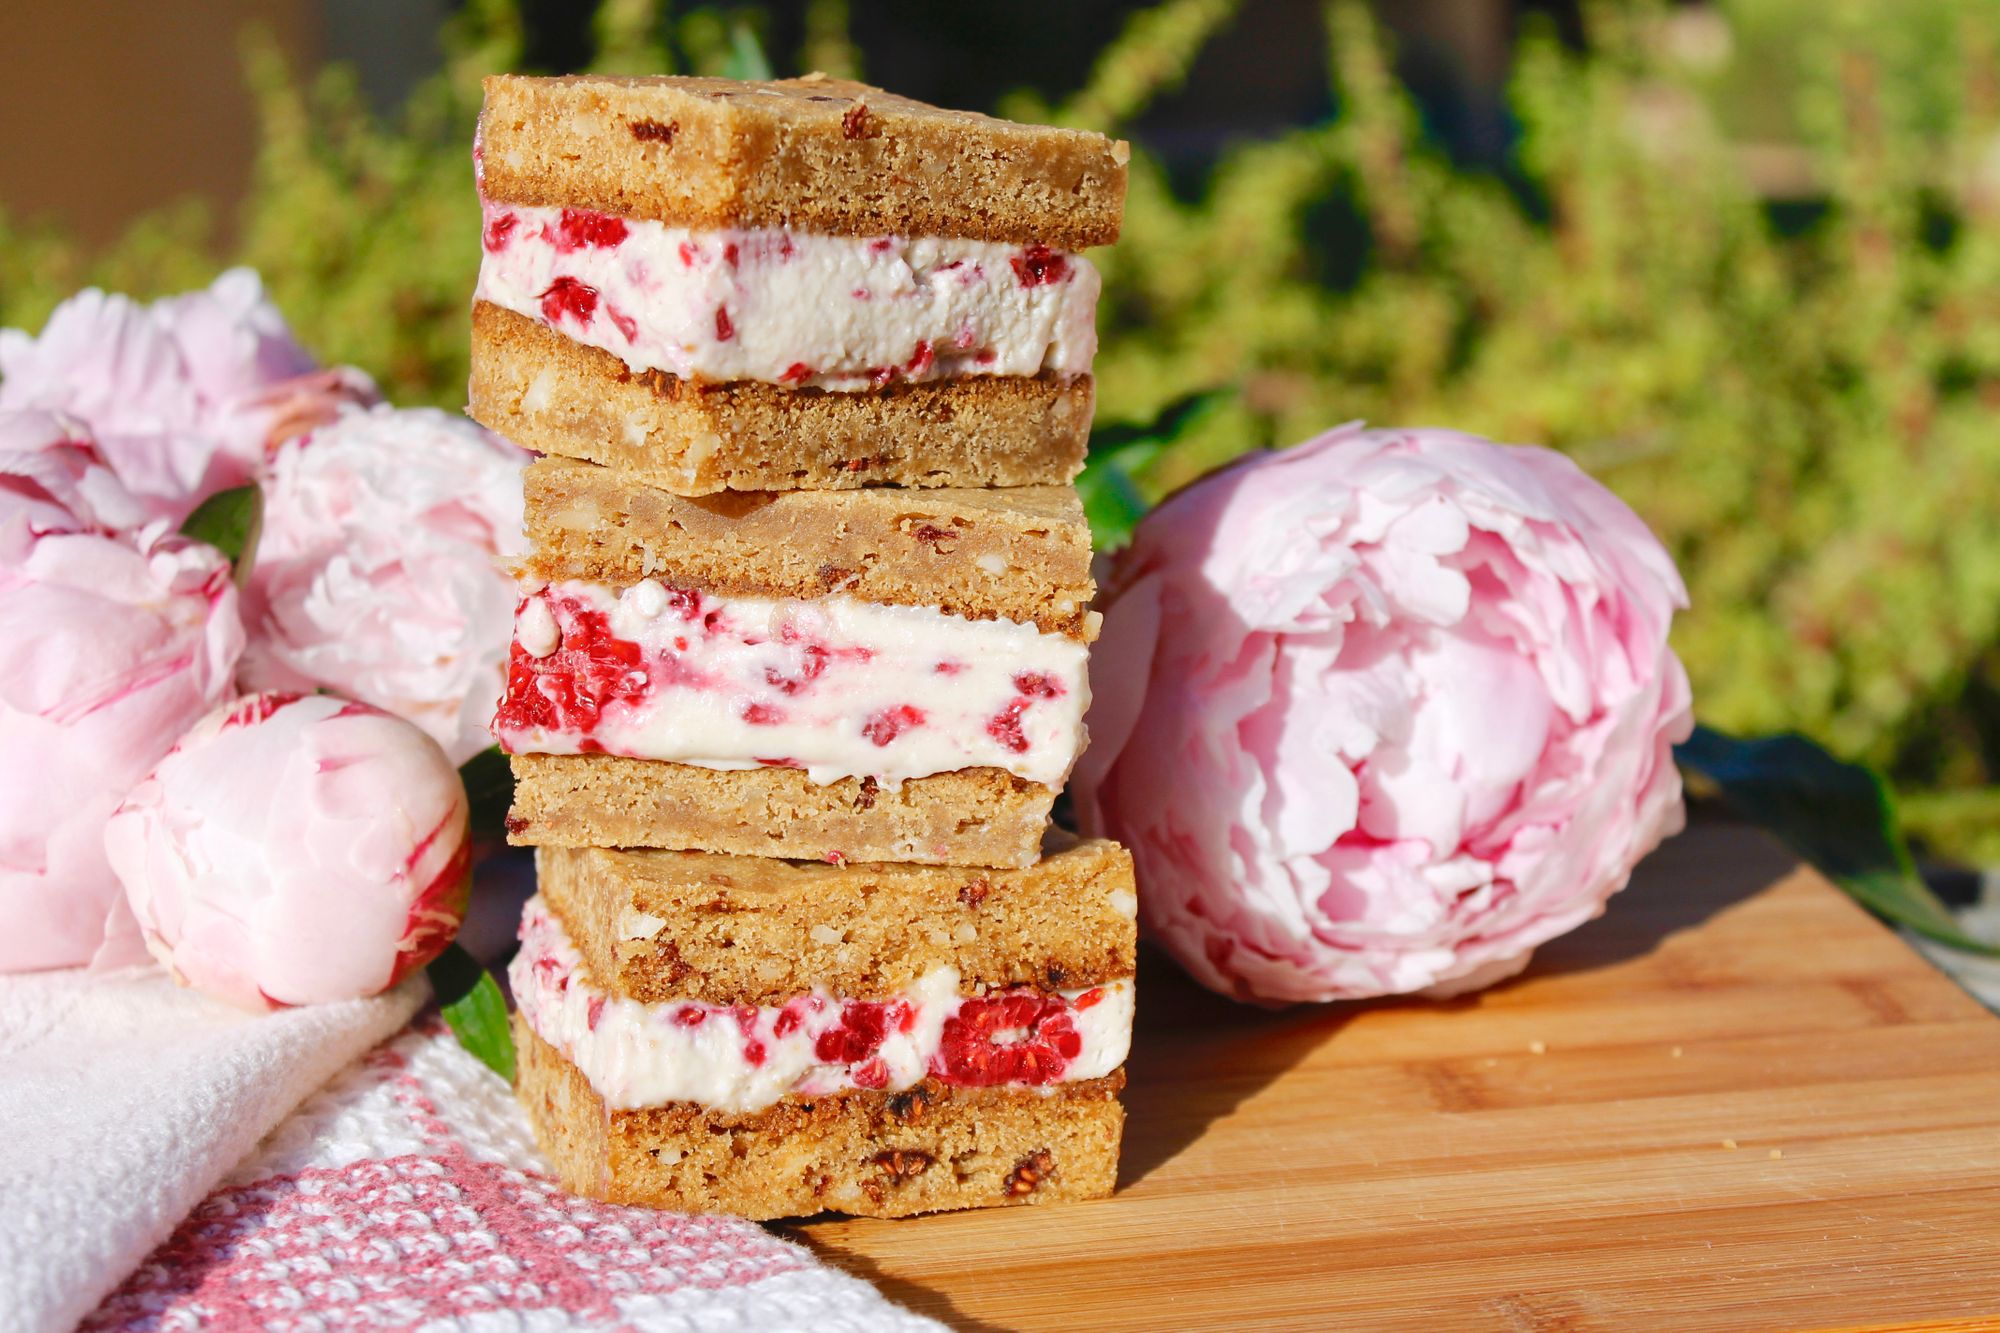 Vegan Raspberry White Chocolate Ice Cream Sandwiches with Raspberry Macadamia Cookies